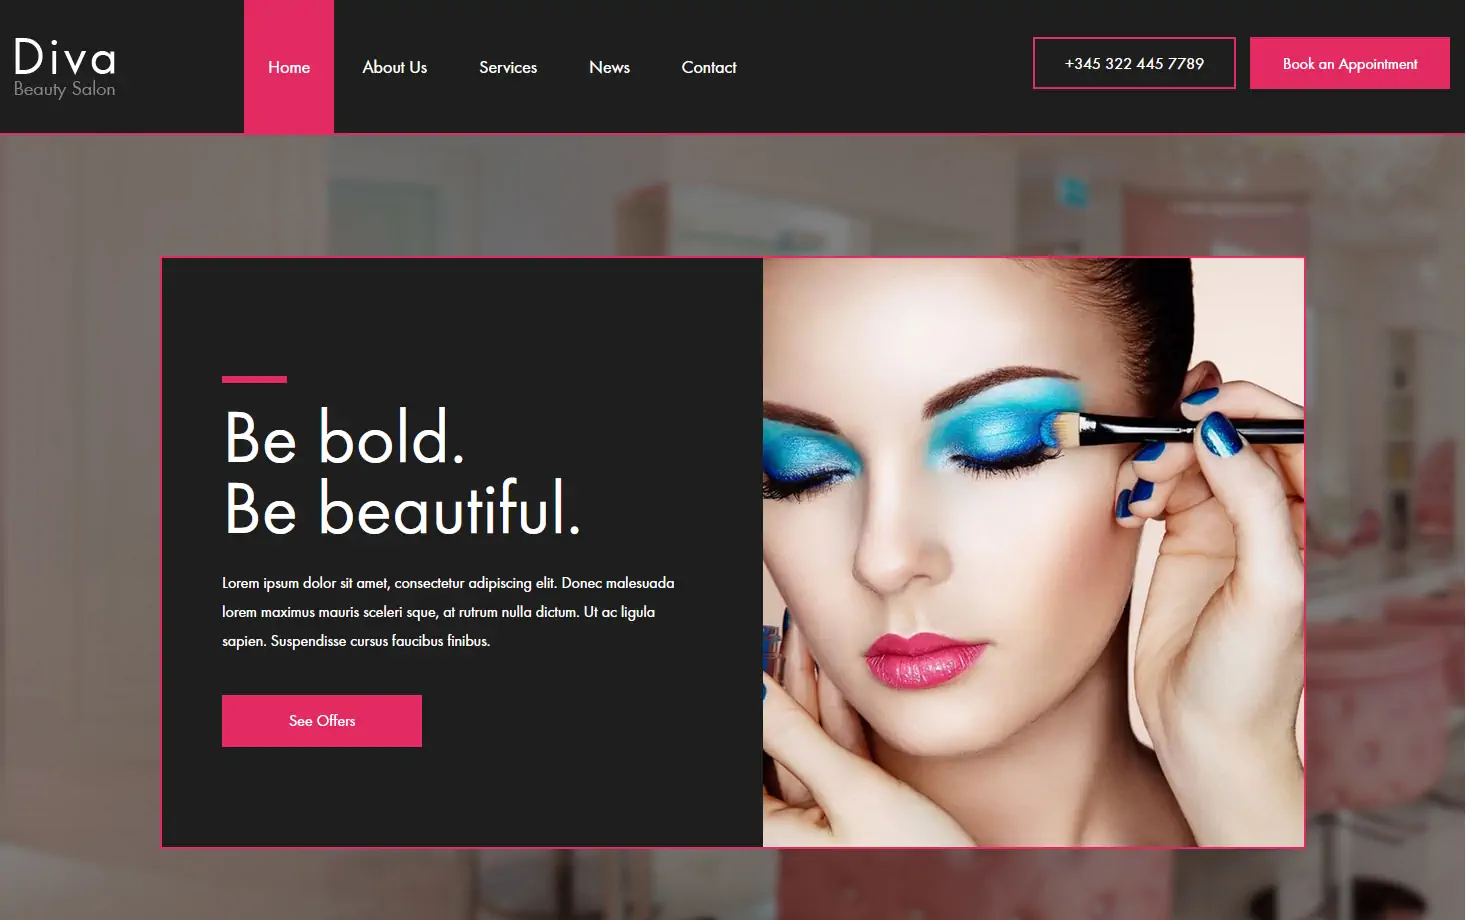 Diva: Stunning Mobile-Ready Free Beauty Salon Website Template | Best Free HTML/CSS Templates